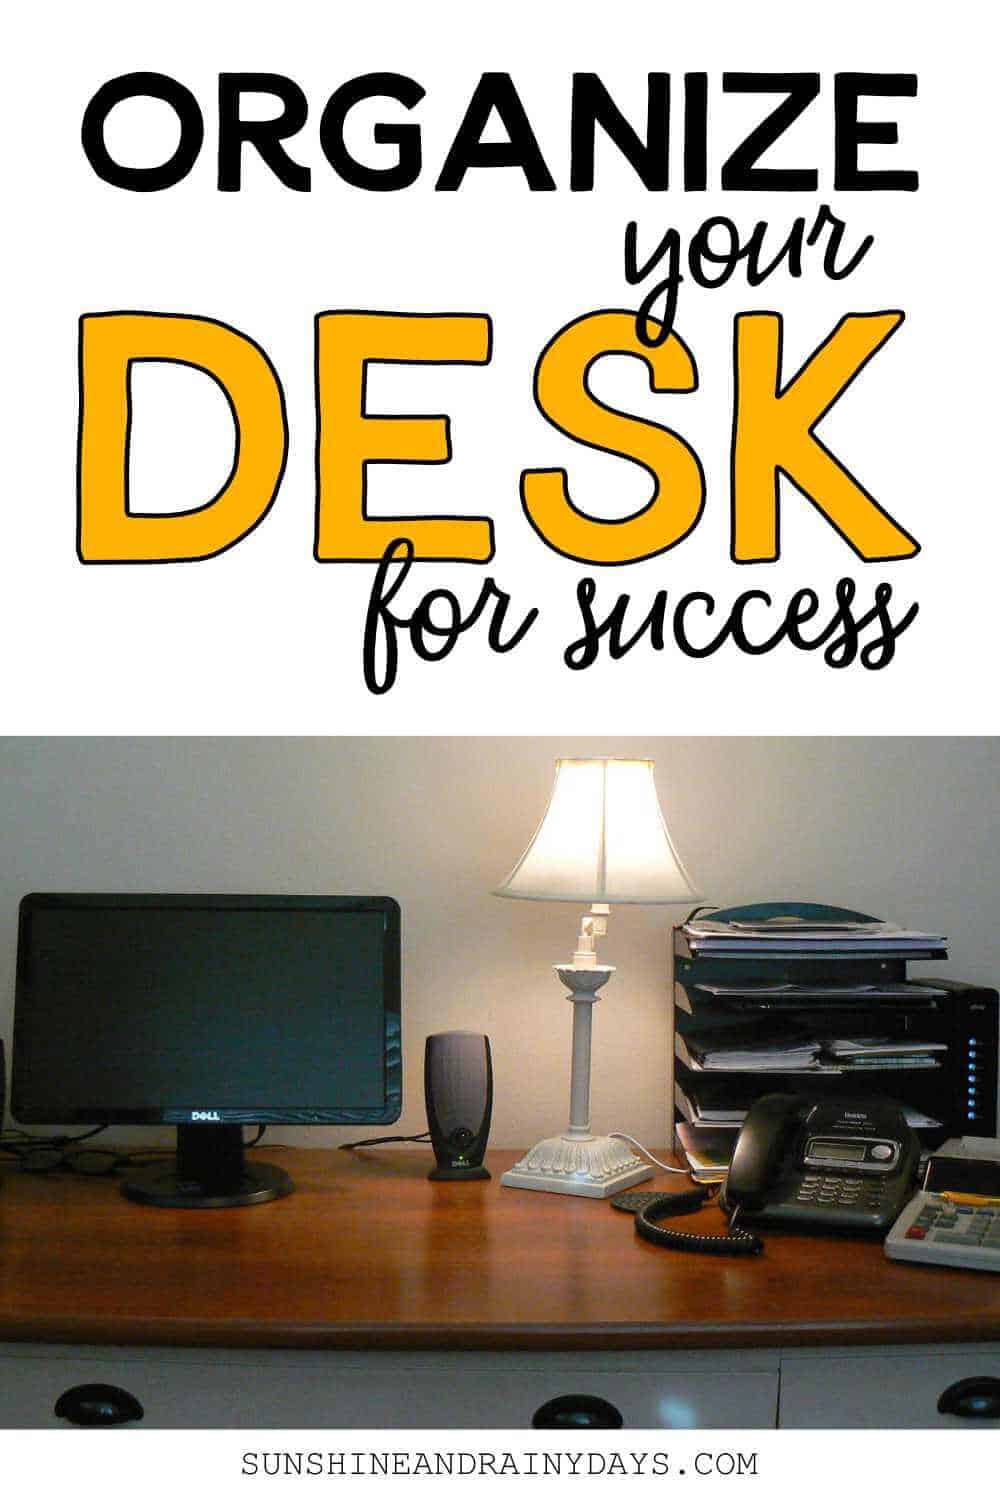 https://sunshineandrainydays.com/wp-content/uploads/2014/03/Organize-Your-Desk-For-Success-P_1.jpg